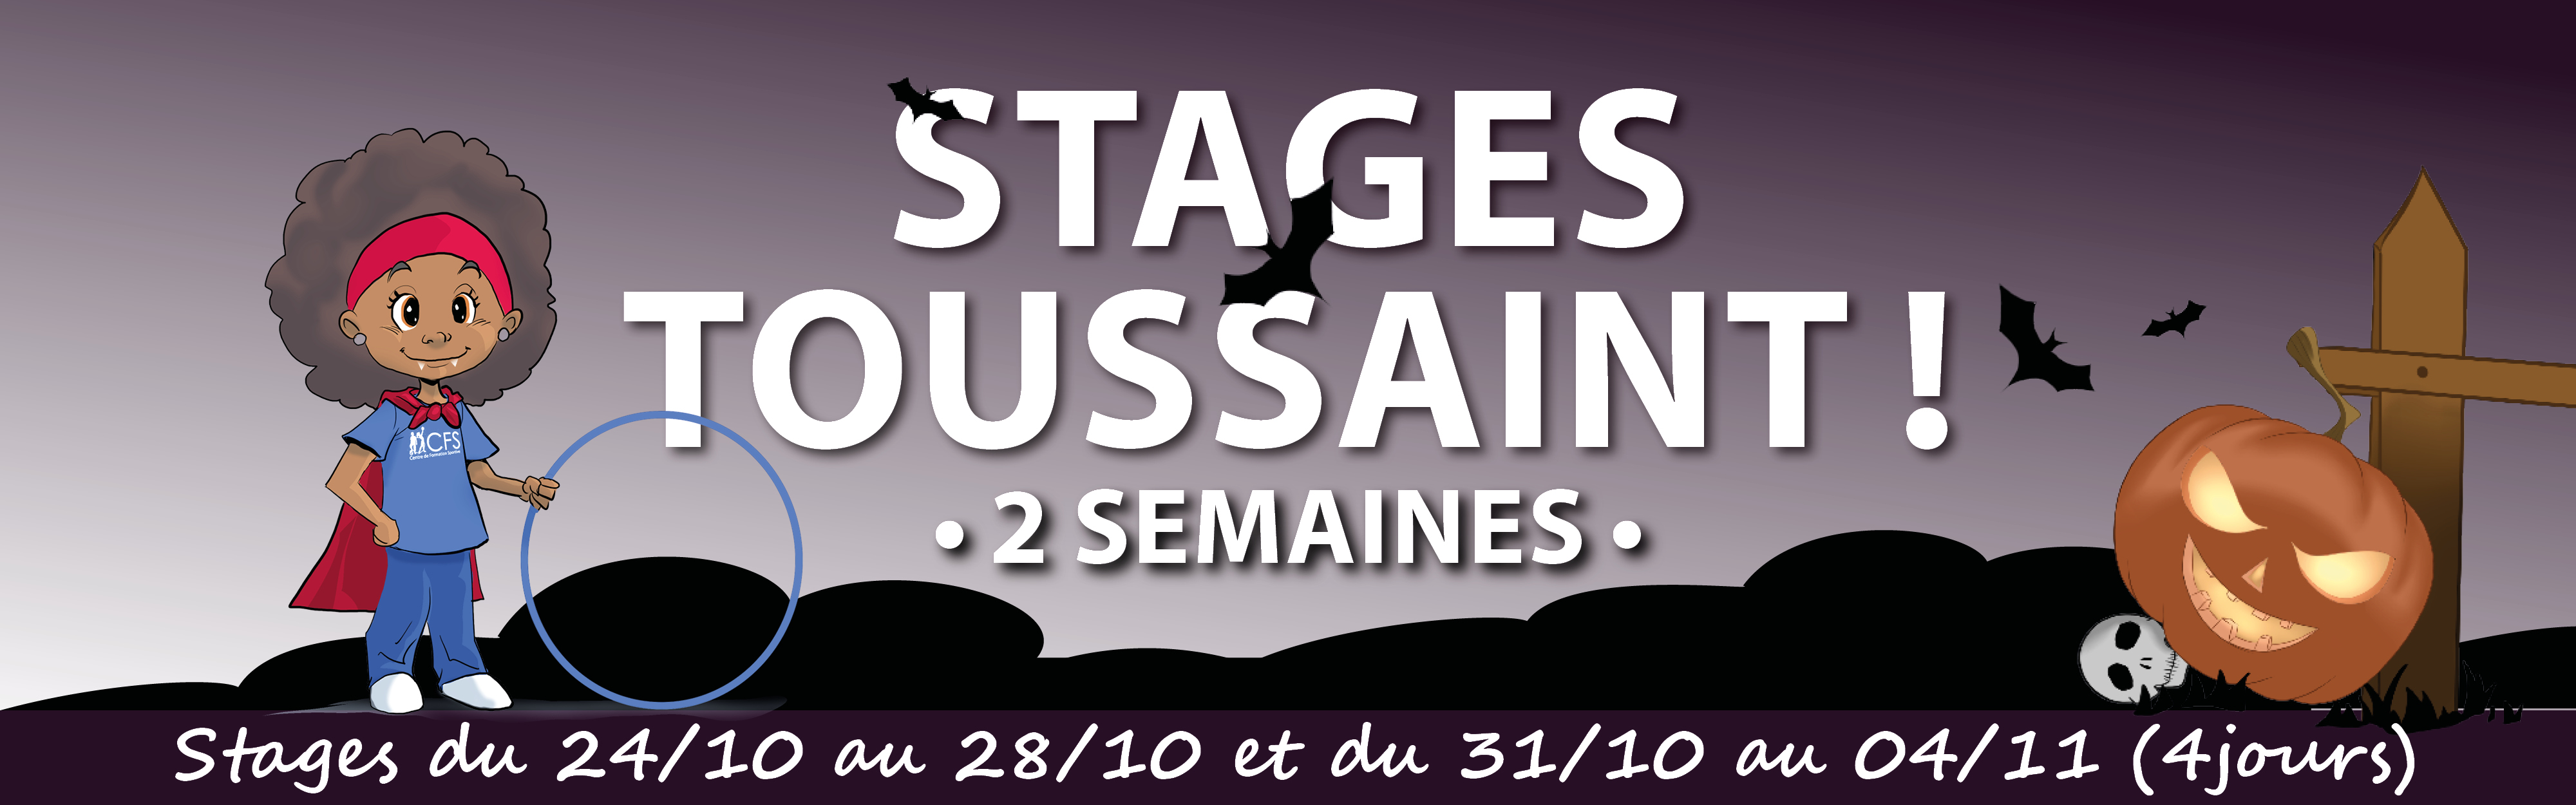 Stages Toussaint